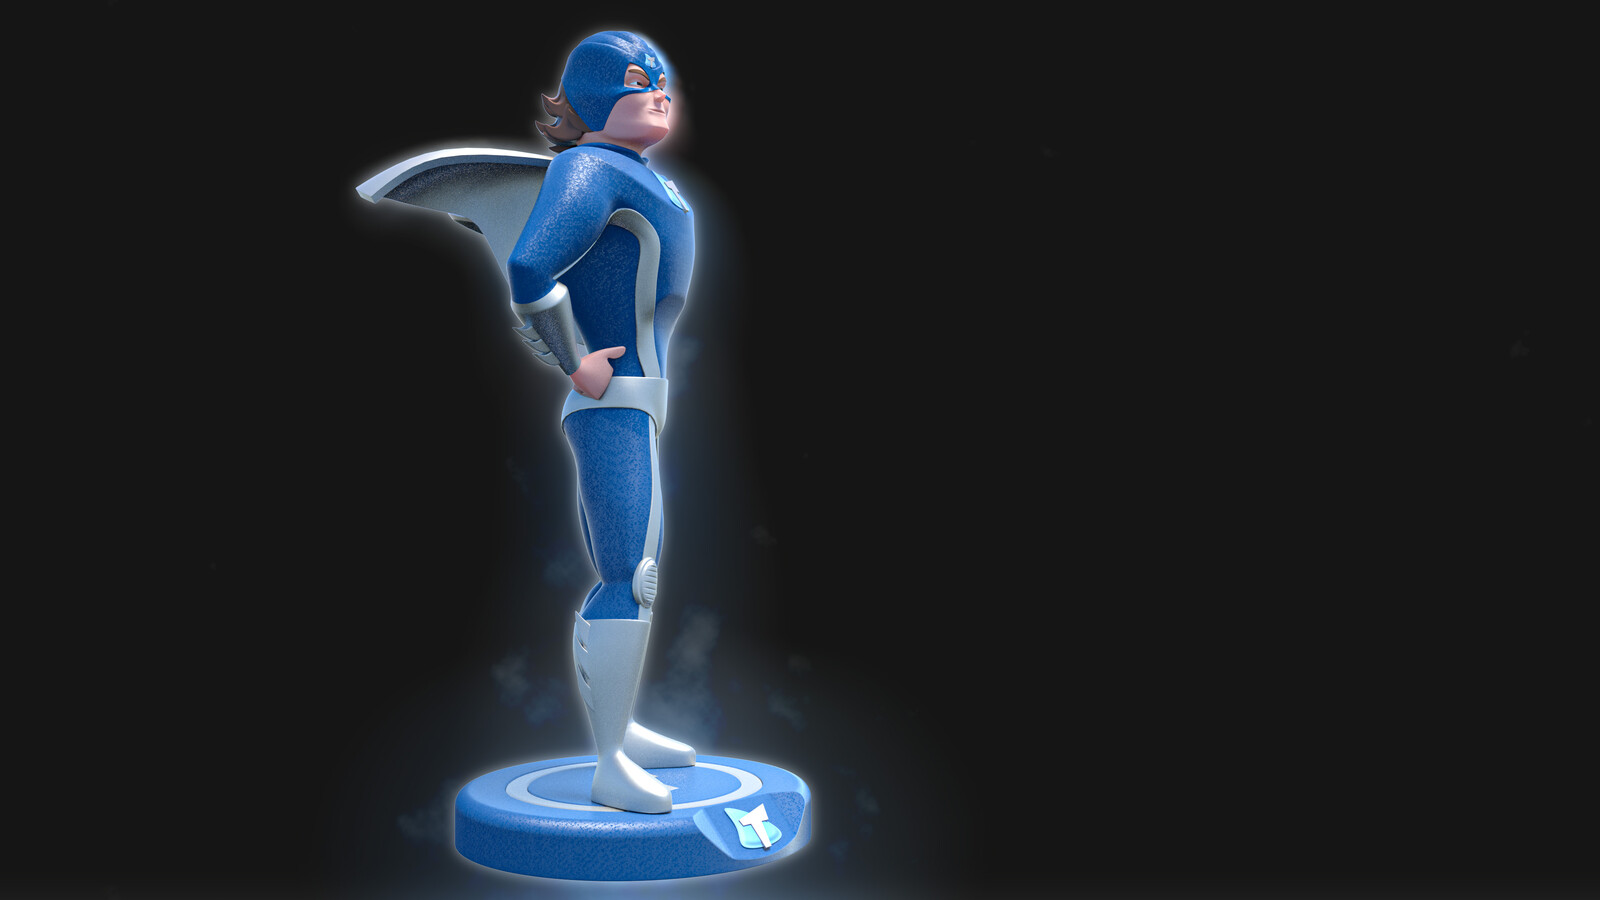 Mega Mindy fan Art
Mega Toby re-imagined as a Disney Infinity hero